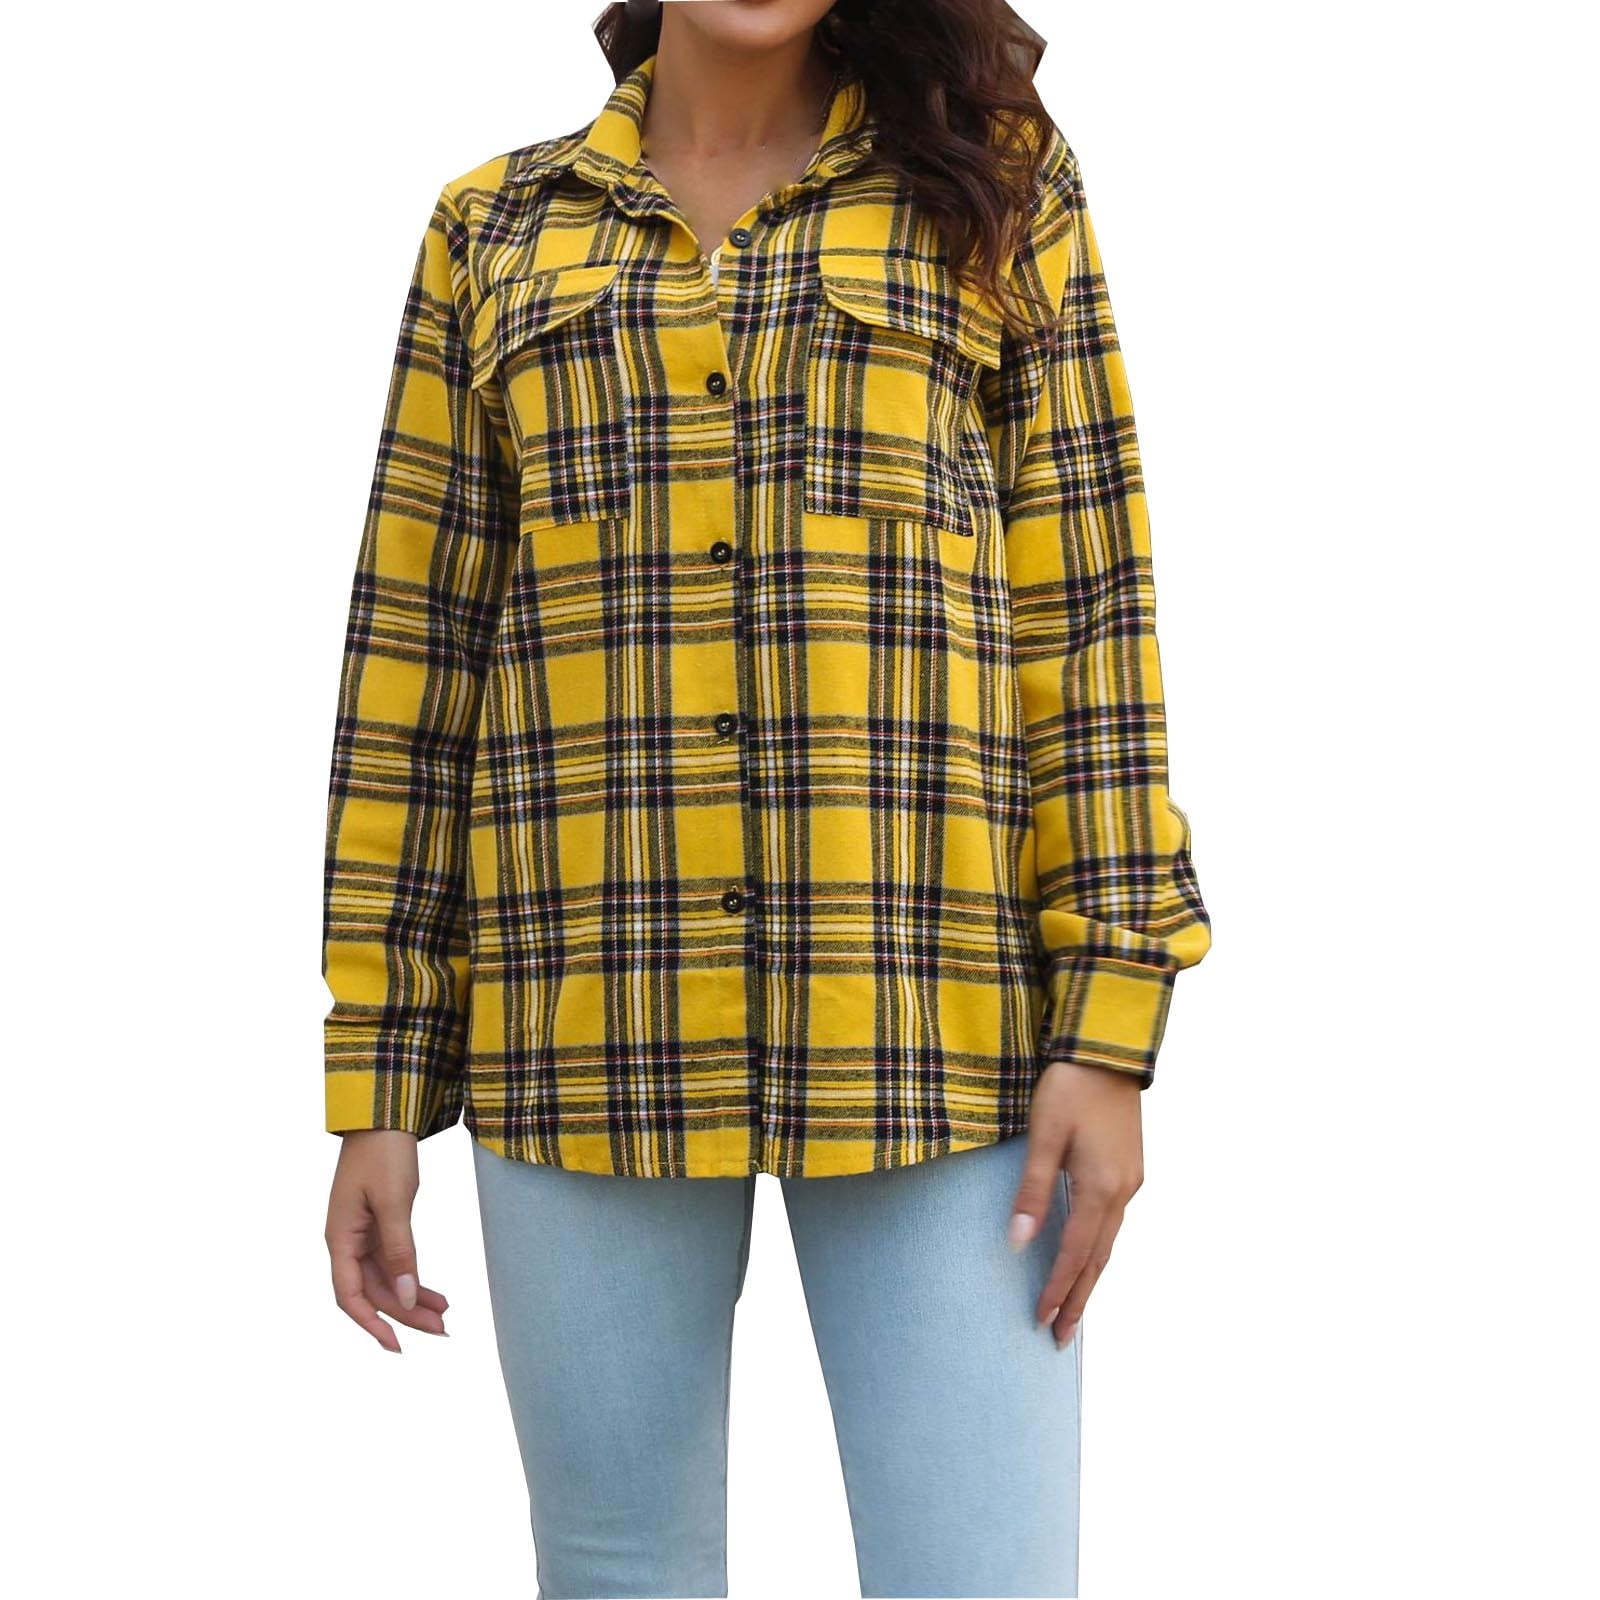 XFLWAM Oversized Flannel Shirt Women Long Sleeve Plaid Button Down Buffalo  Shirt Blouse Tops with Pocket Yellow M